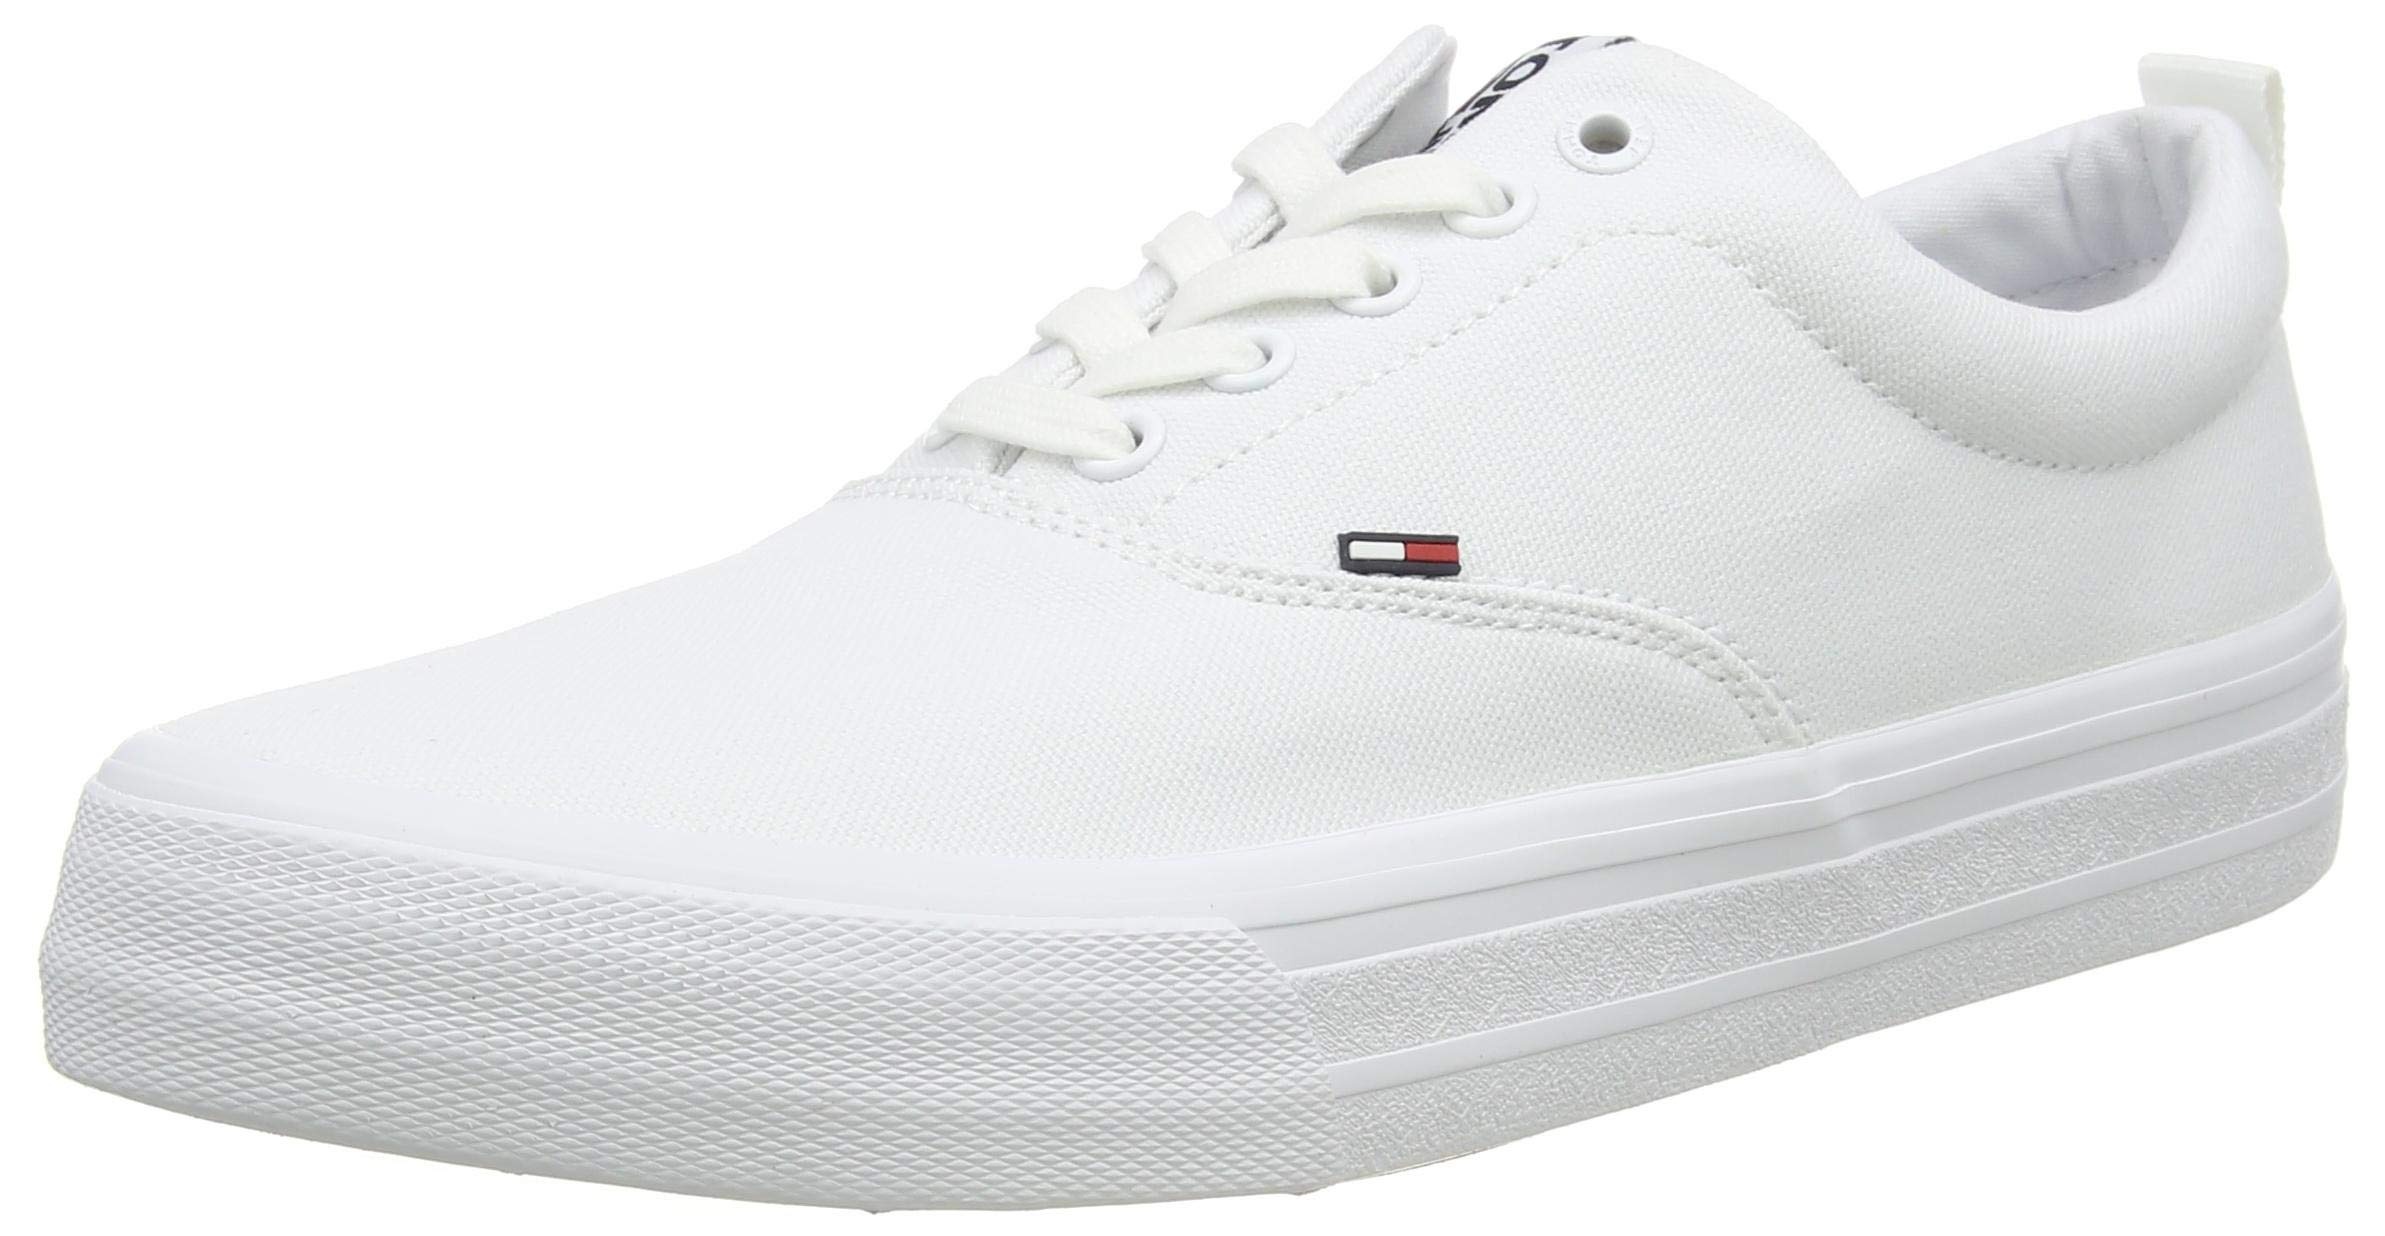 Tommy Hilfiger Herren Vulcanized Sneaker Classic Schuhe, Weiß (White), 46 EU